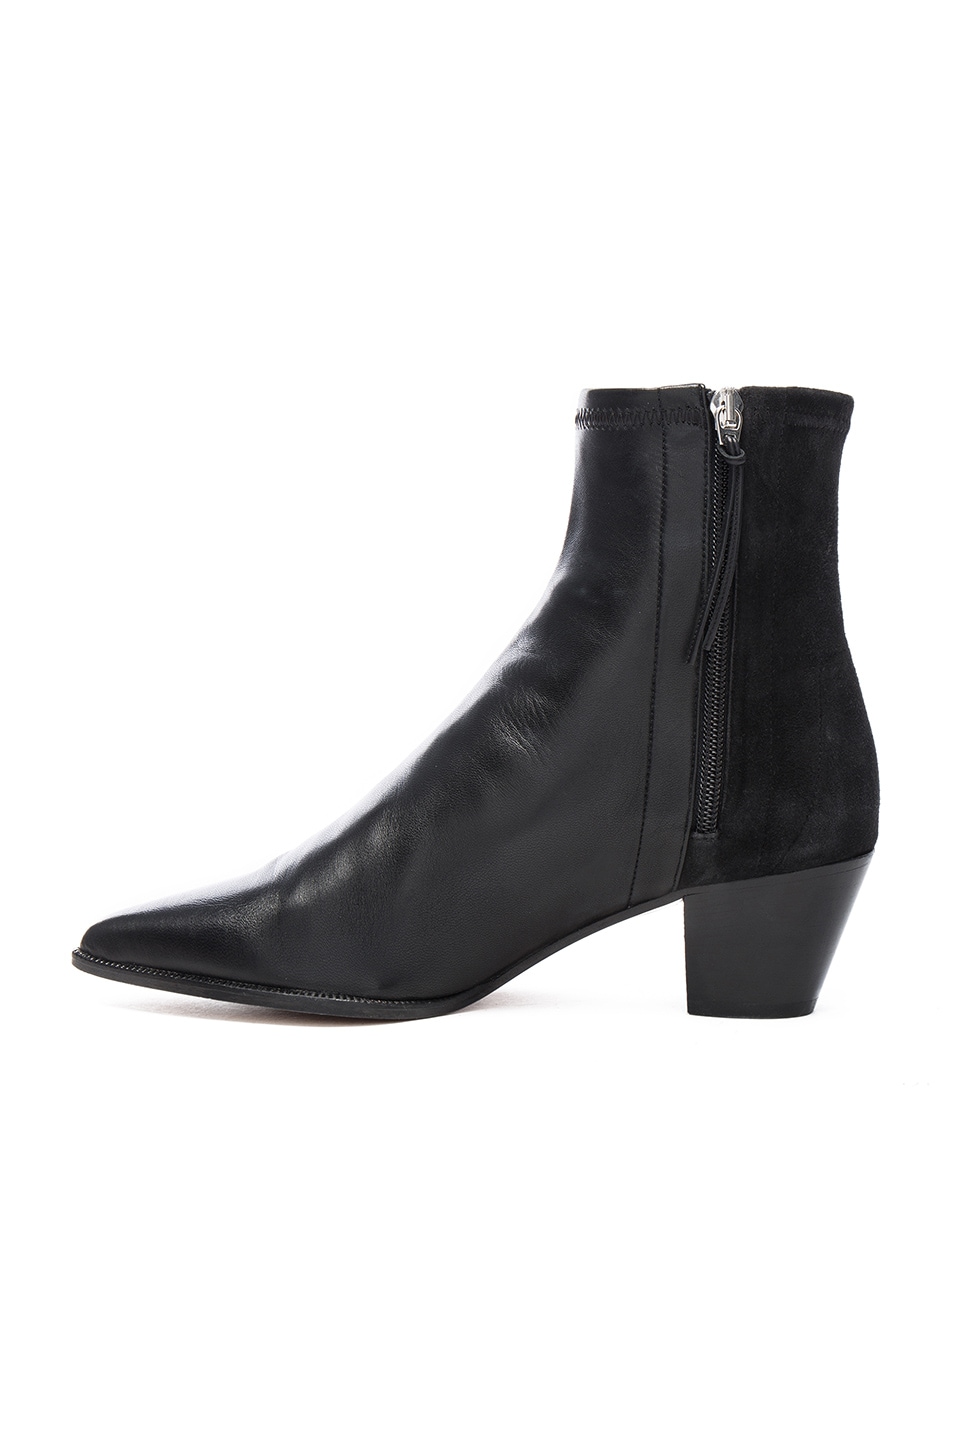 Isabel Marant Dabbs Velvet & Leather Boots in Black | FWRD